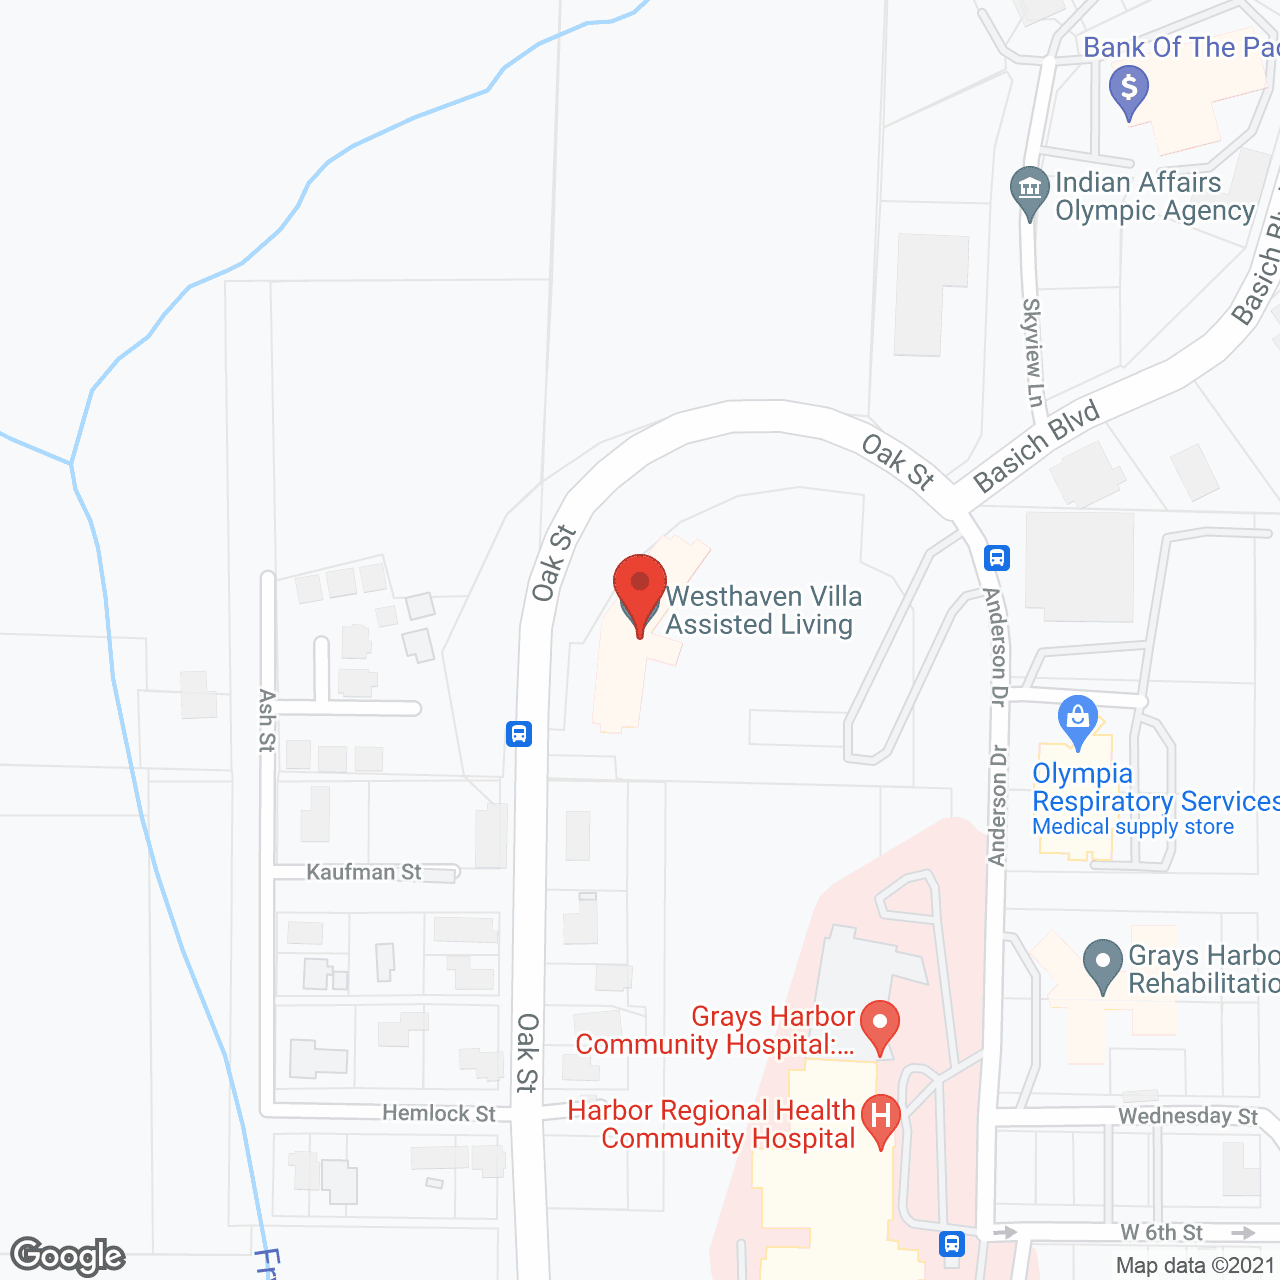 Westhaven Villa in google map